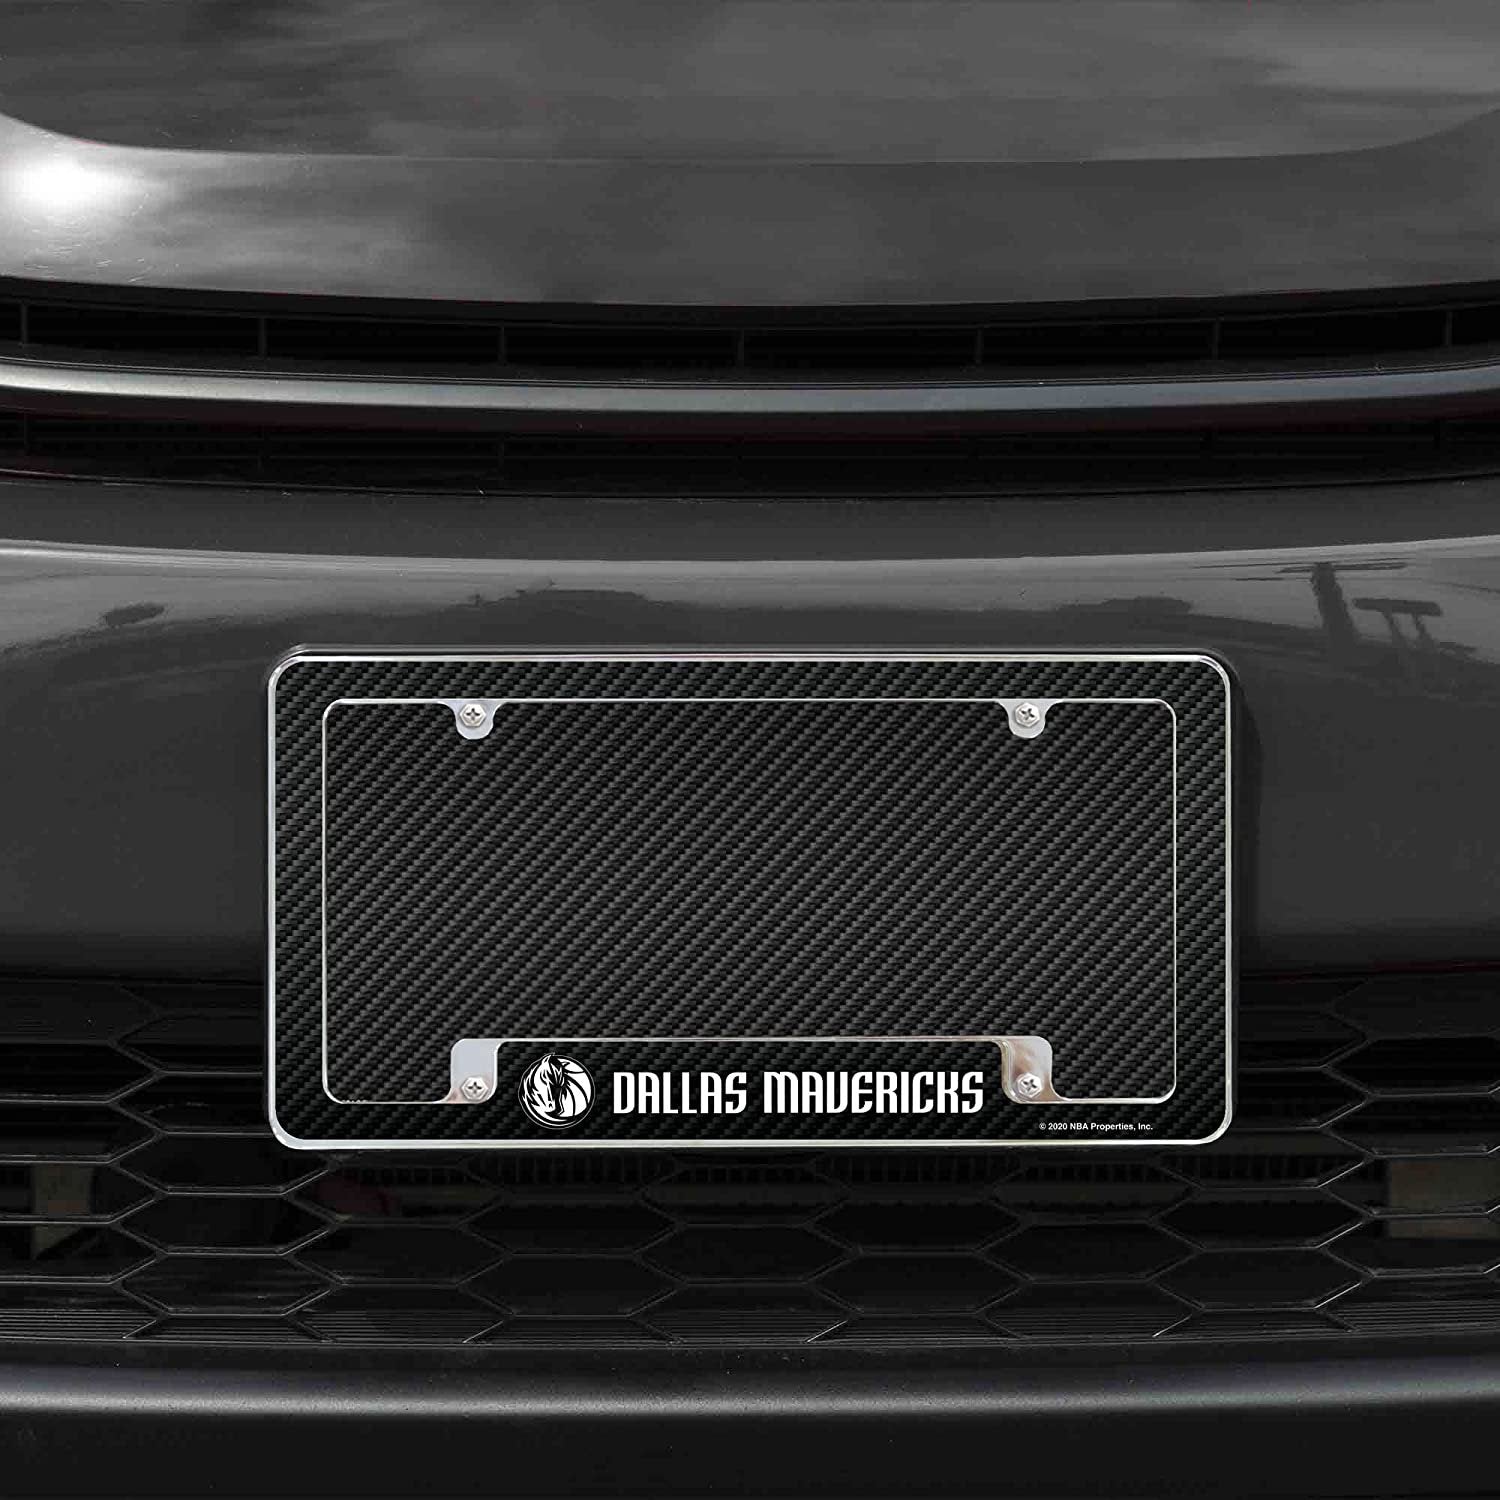 Dallas Mavericks Metal License Plate Frame Chrome Tag Cover Carbon Fiber Design 6x12 Inch